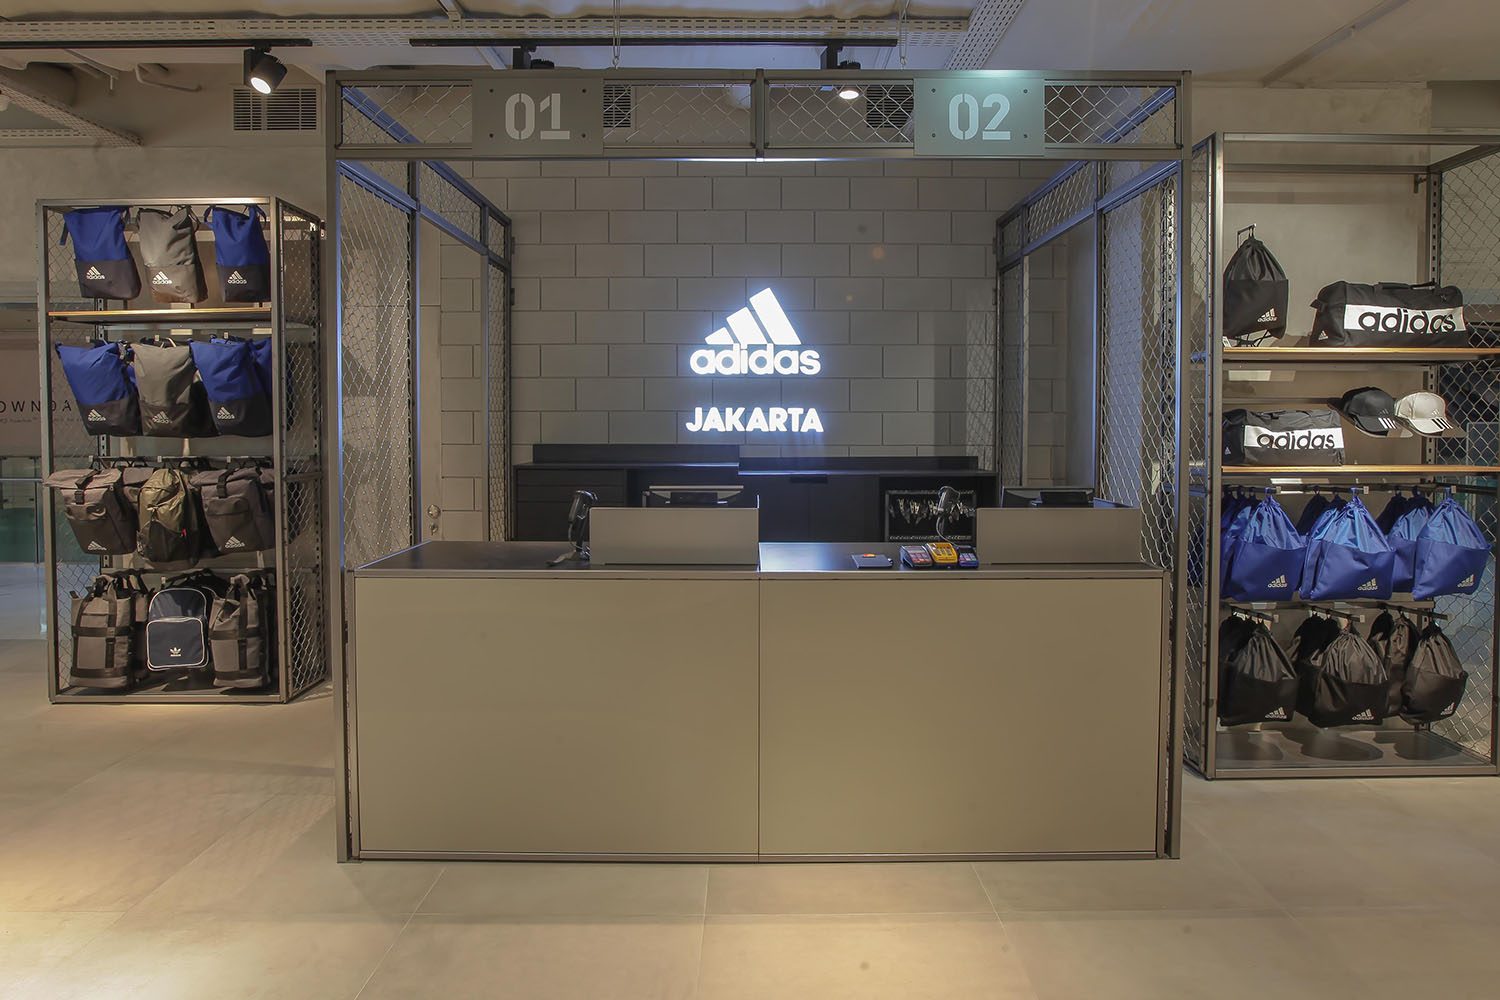 NHBL - Adidas Indonesia Opens New Concept Retail Store, 'Stadium'